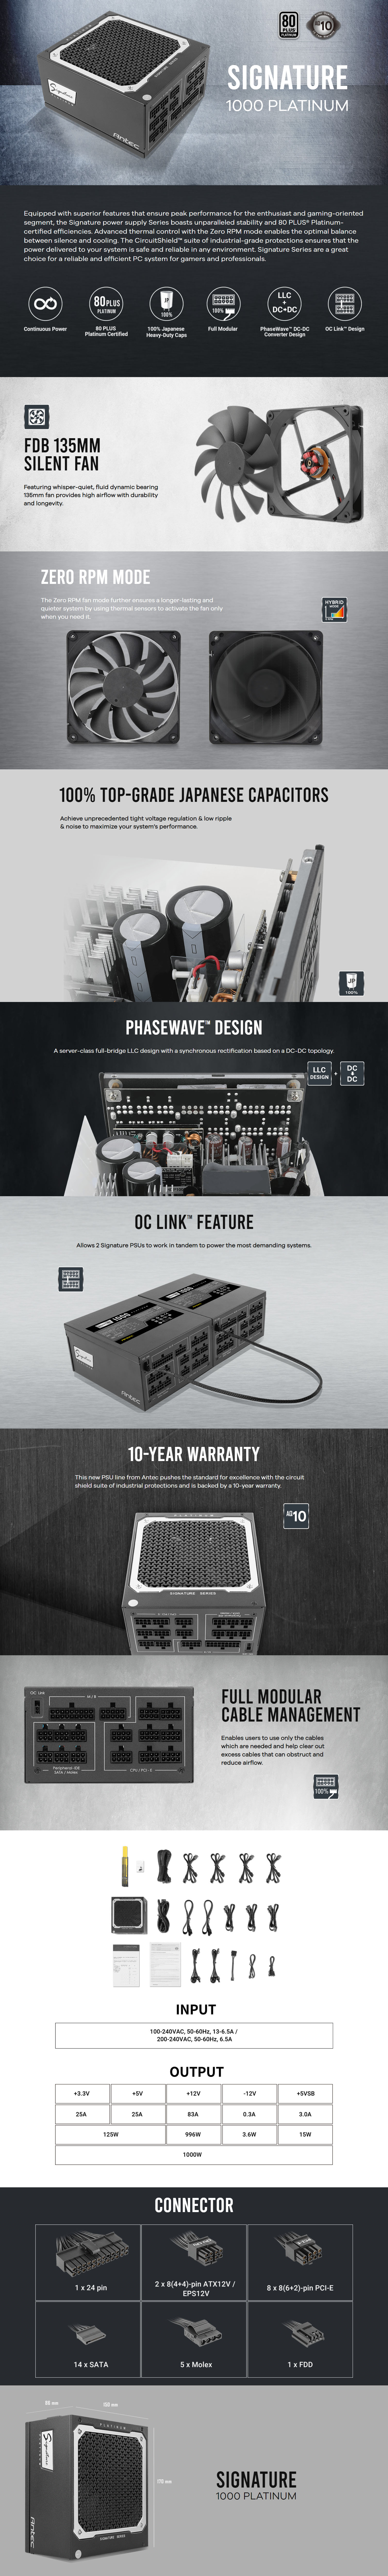 Power-Supply-PSU-Antec-SG-1000W-80-Platinum-Fully-Modular-Power-Supply-SP1000AU-1